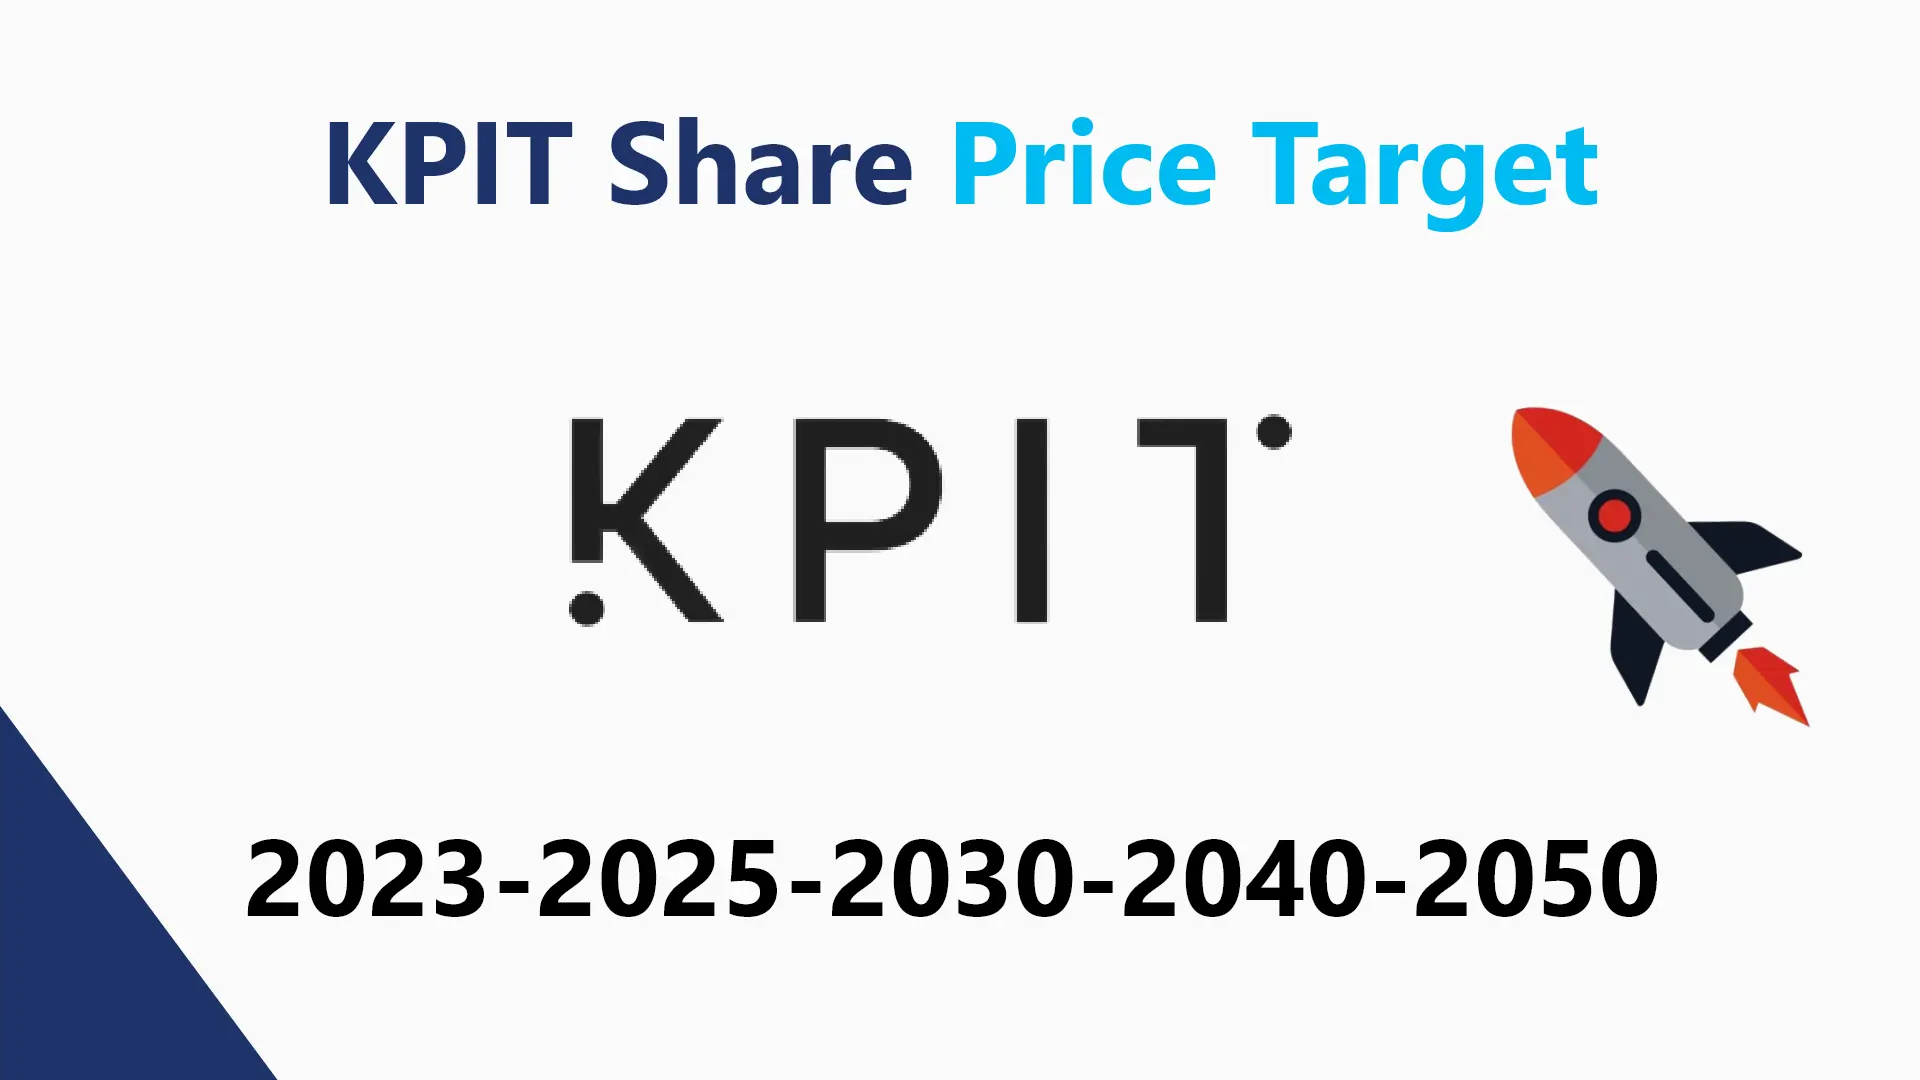 KPIT Share Price Target 2025203020402050